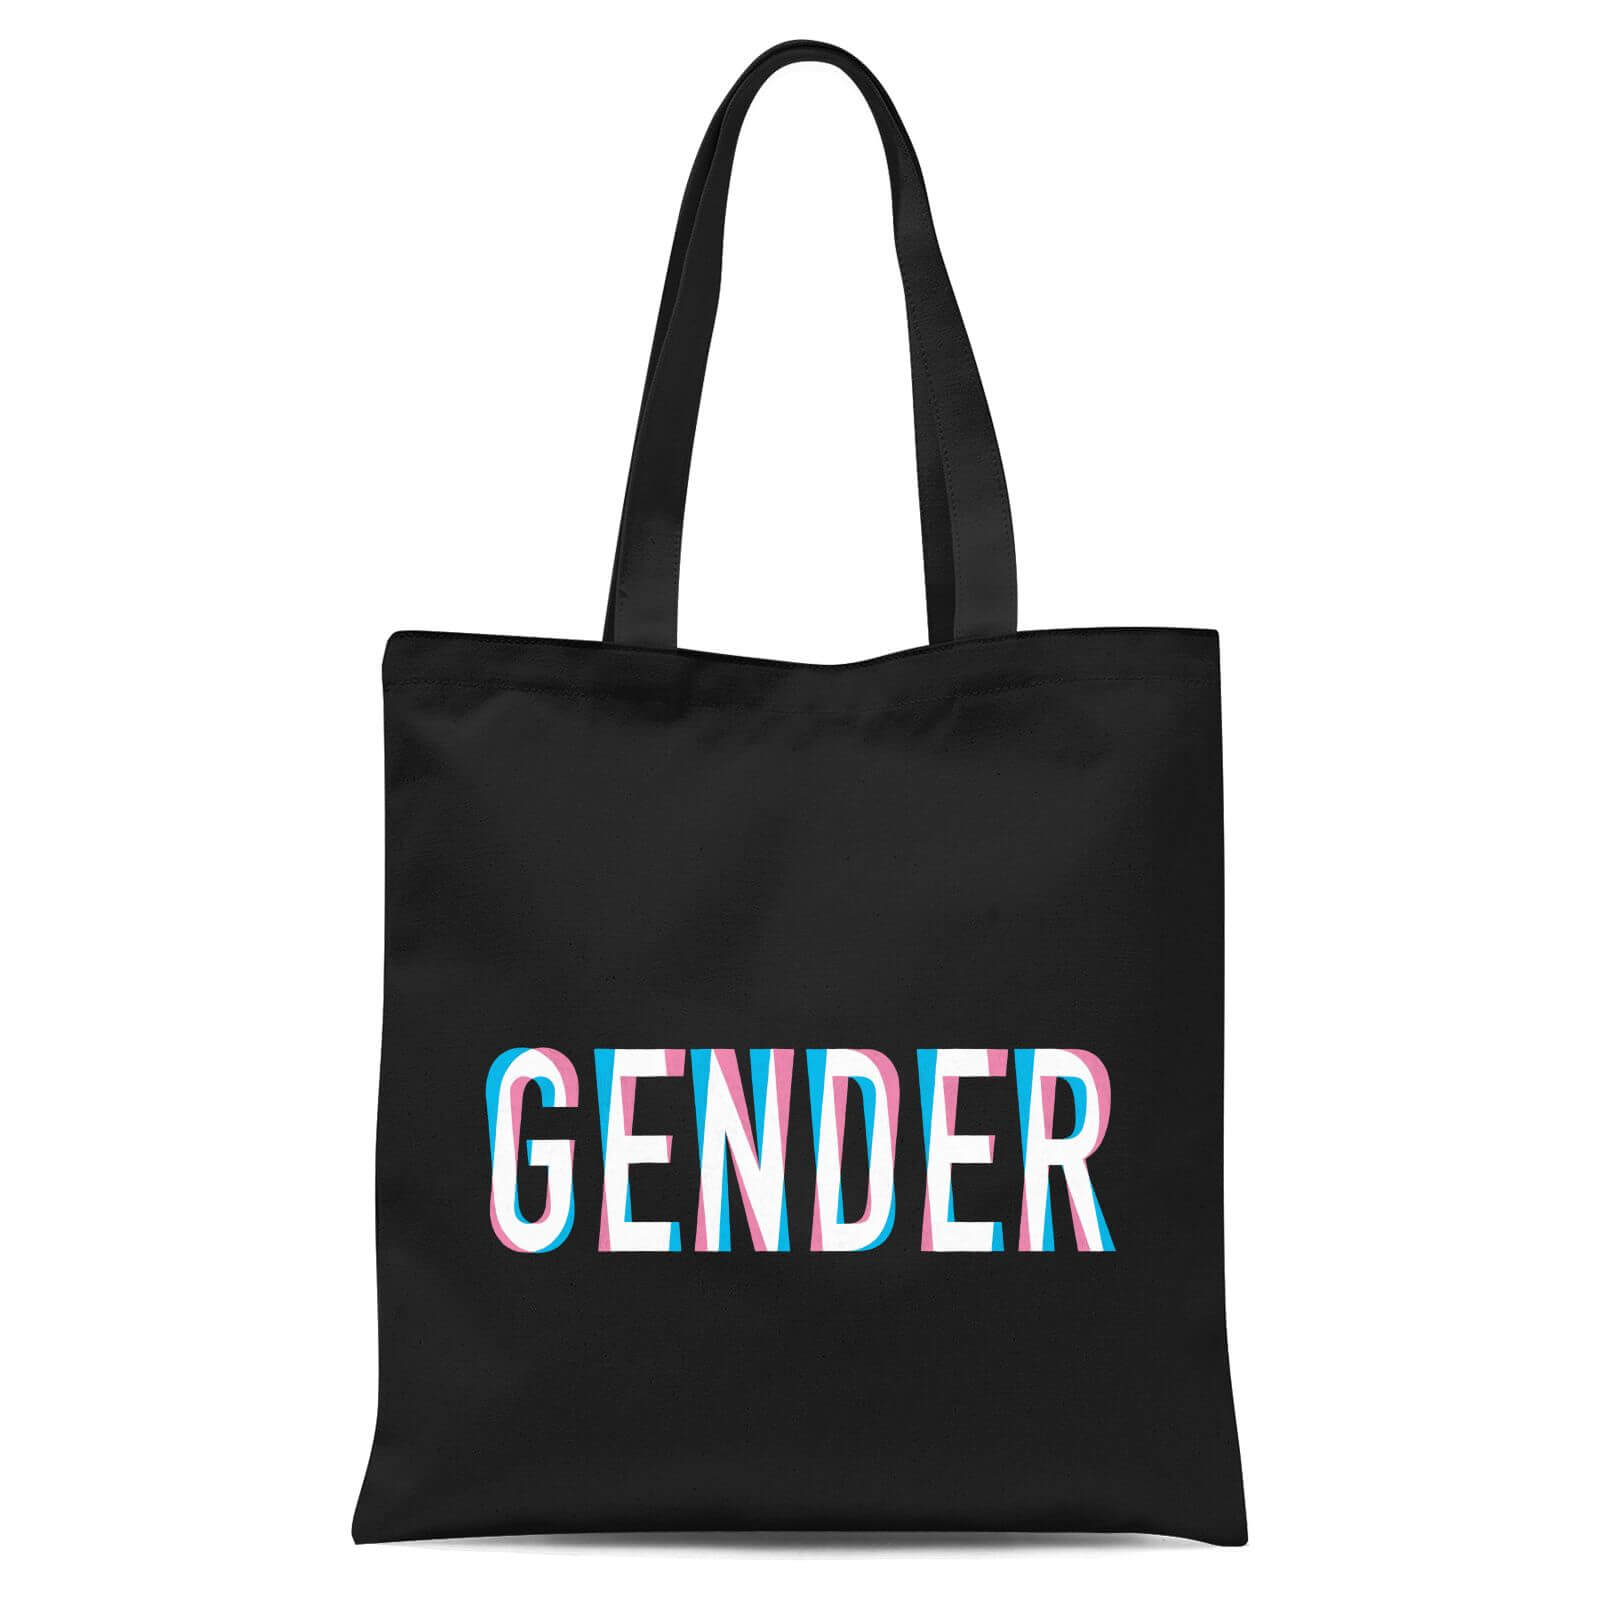 Gender Tote Bag - Black